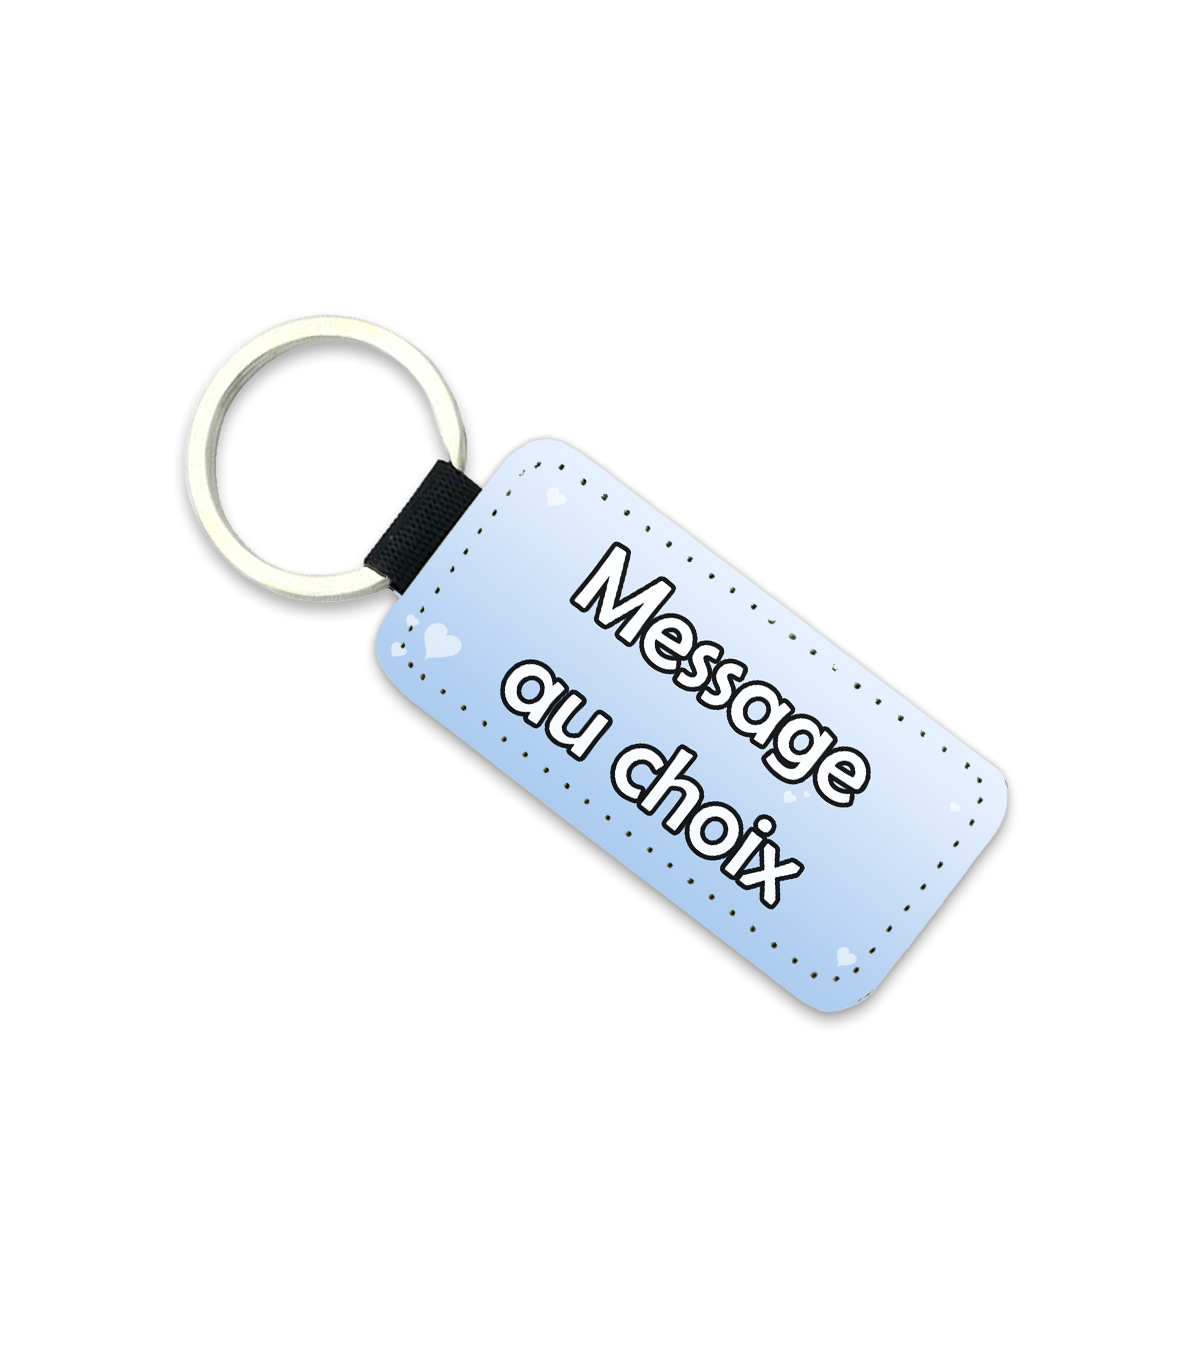 Porte-clés en cuir PU avec photo personnalisée pour hommes, porte-clés  personnalisé, message GNE, papa, mari, petit ami, Drive Safe, cadeaux -  AliExpress